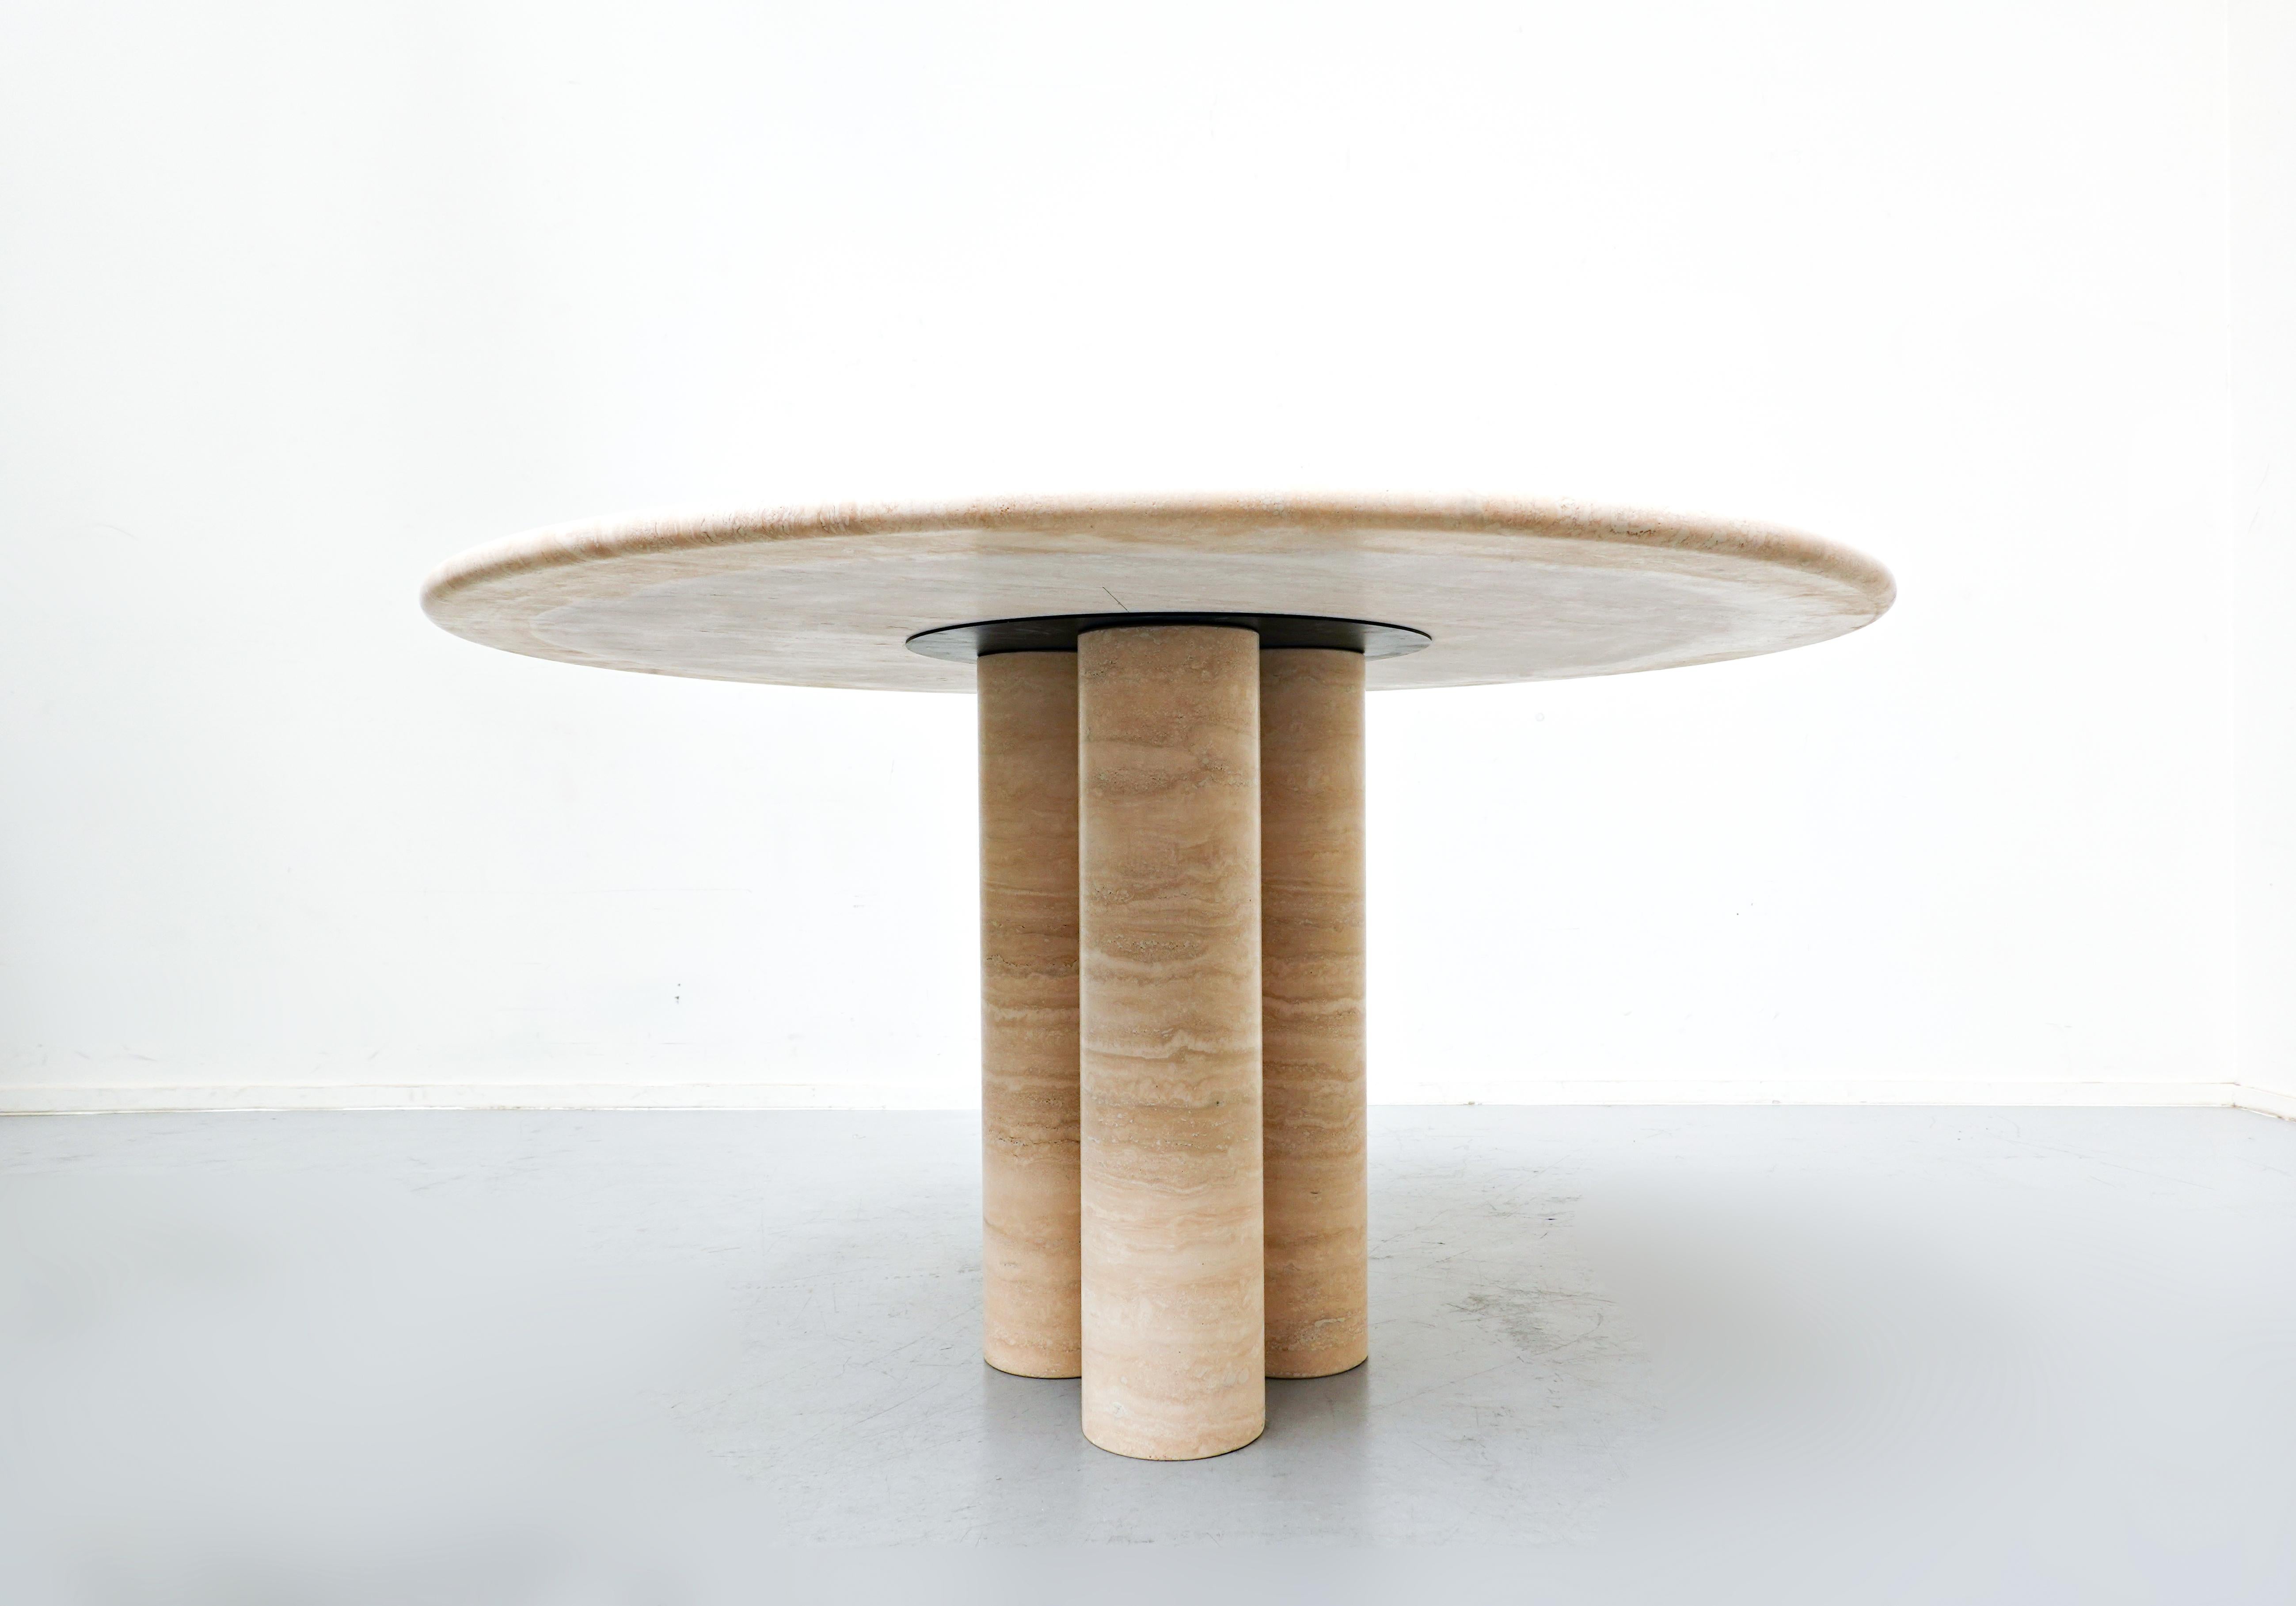 Italian Modern Travertine Dining Table, In style of Mario Bellini, Italy 